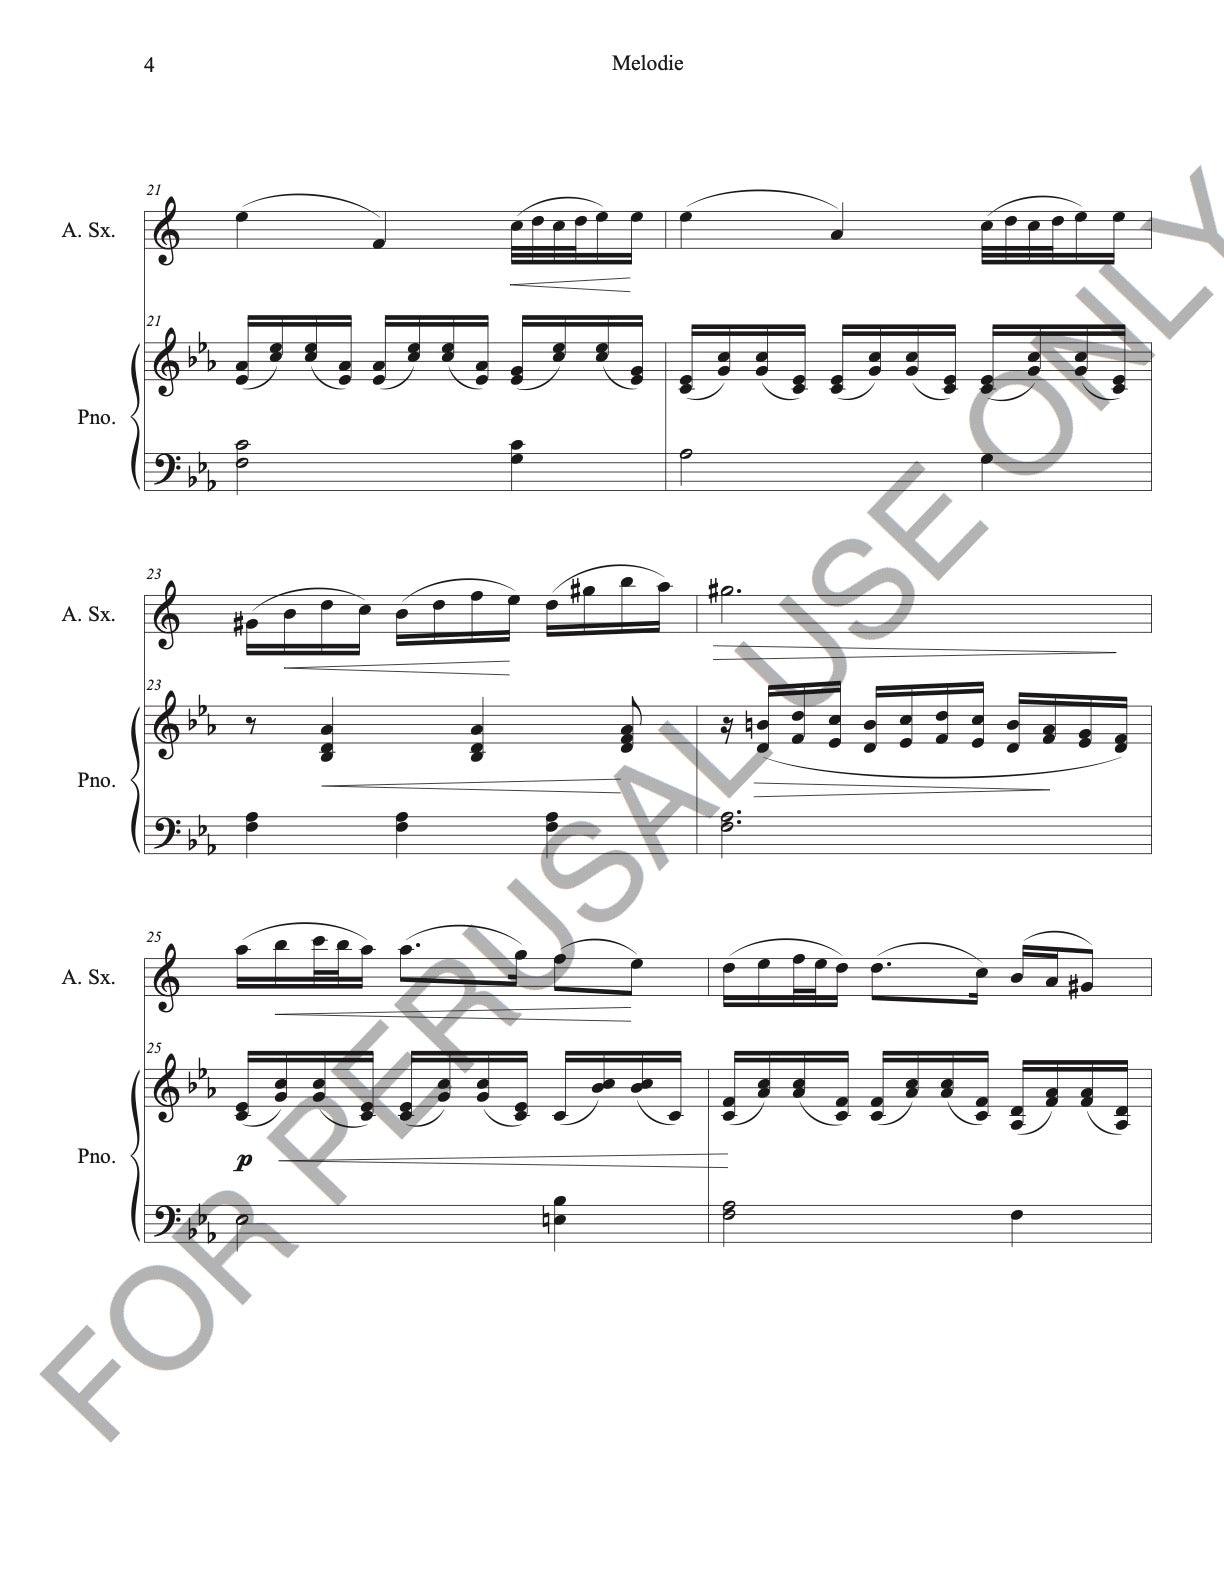 Alto Sax and Piano sheet music: Gluck's Melodie - ChaipruckMekara